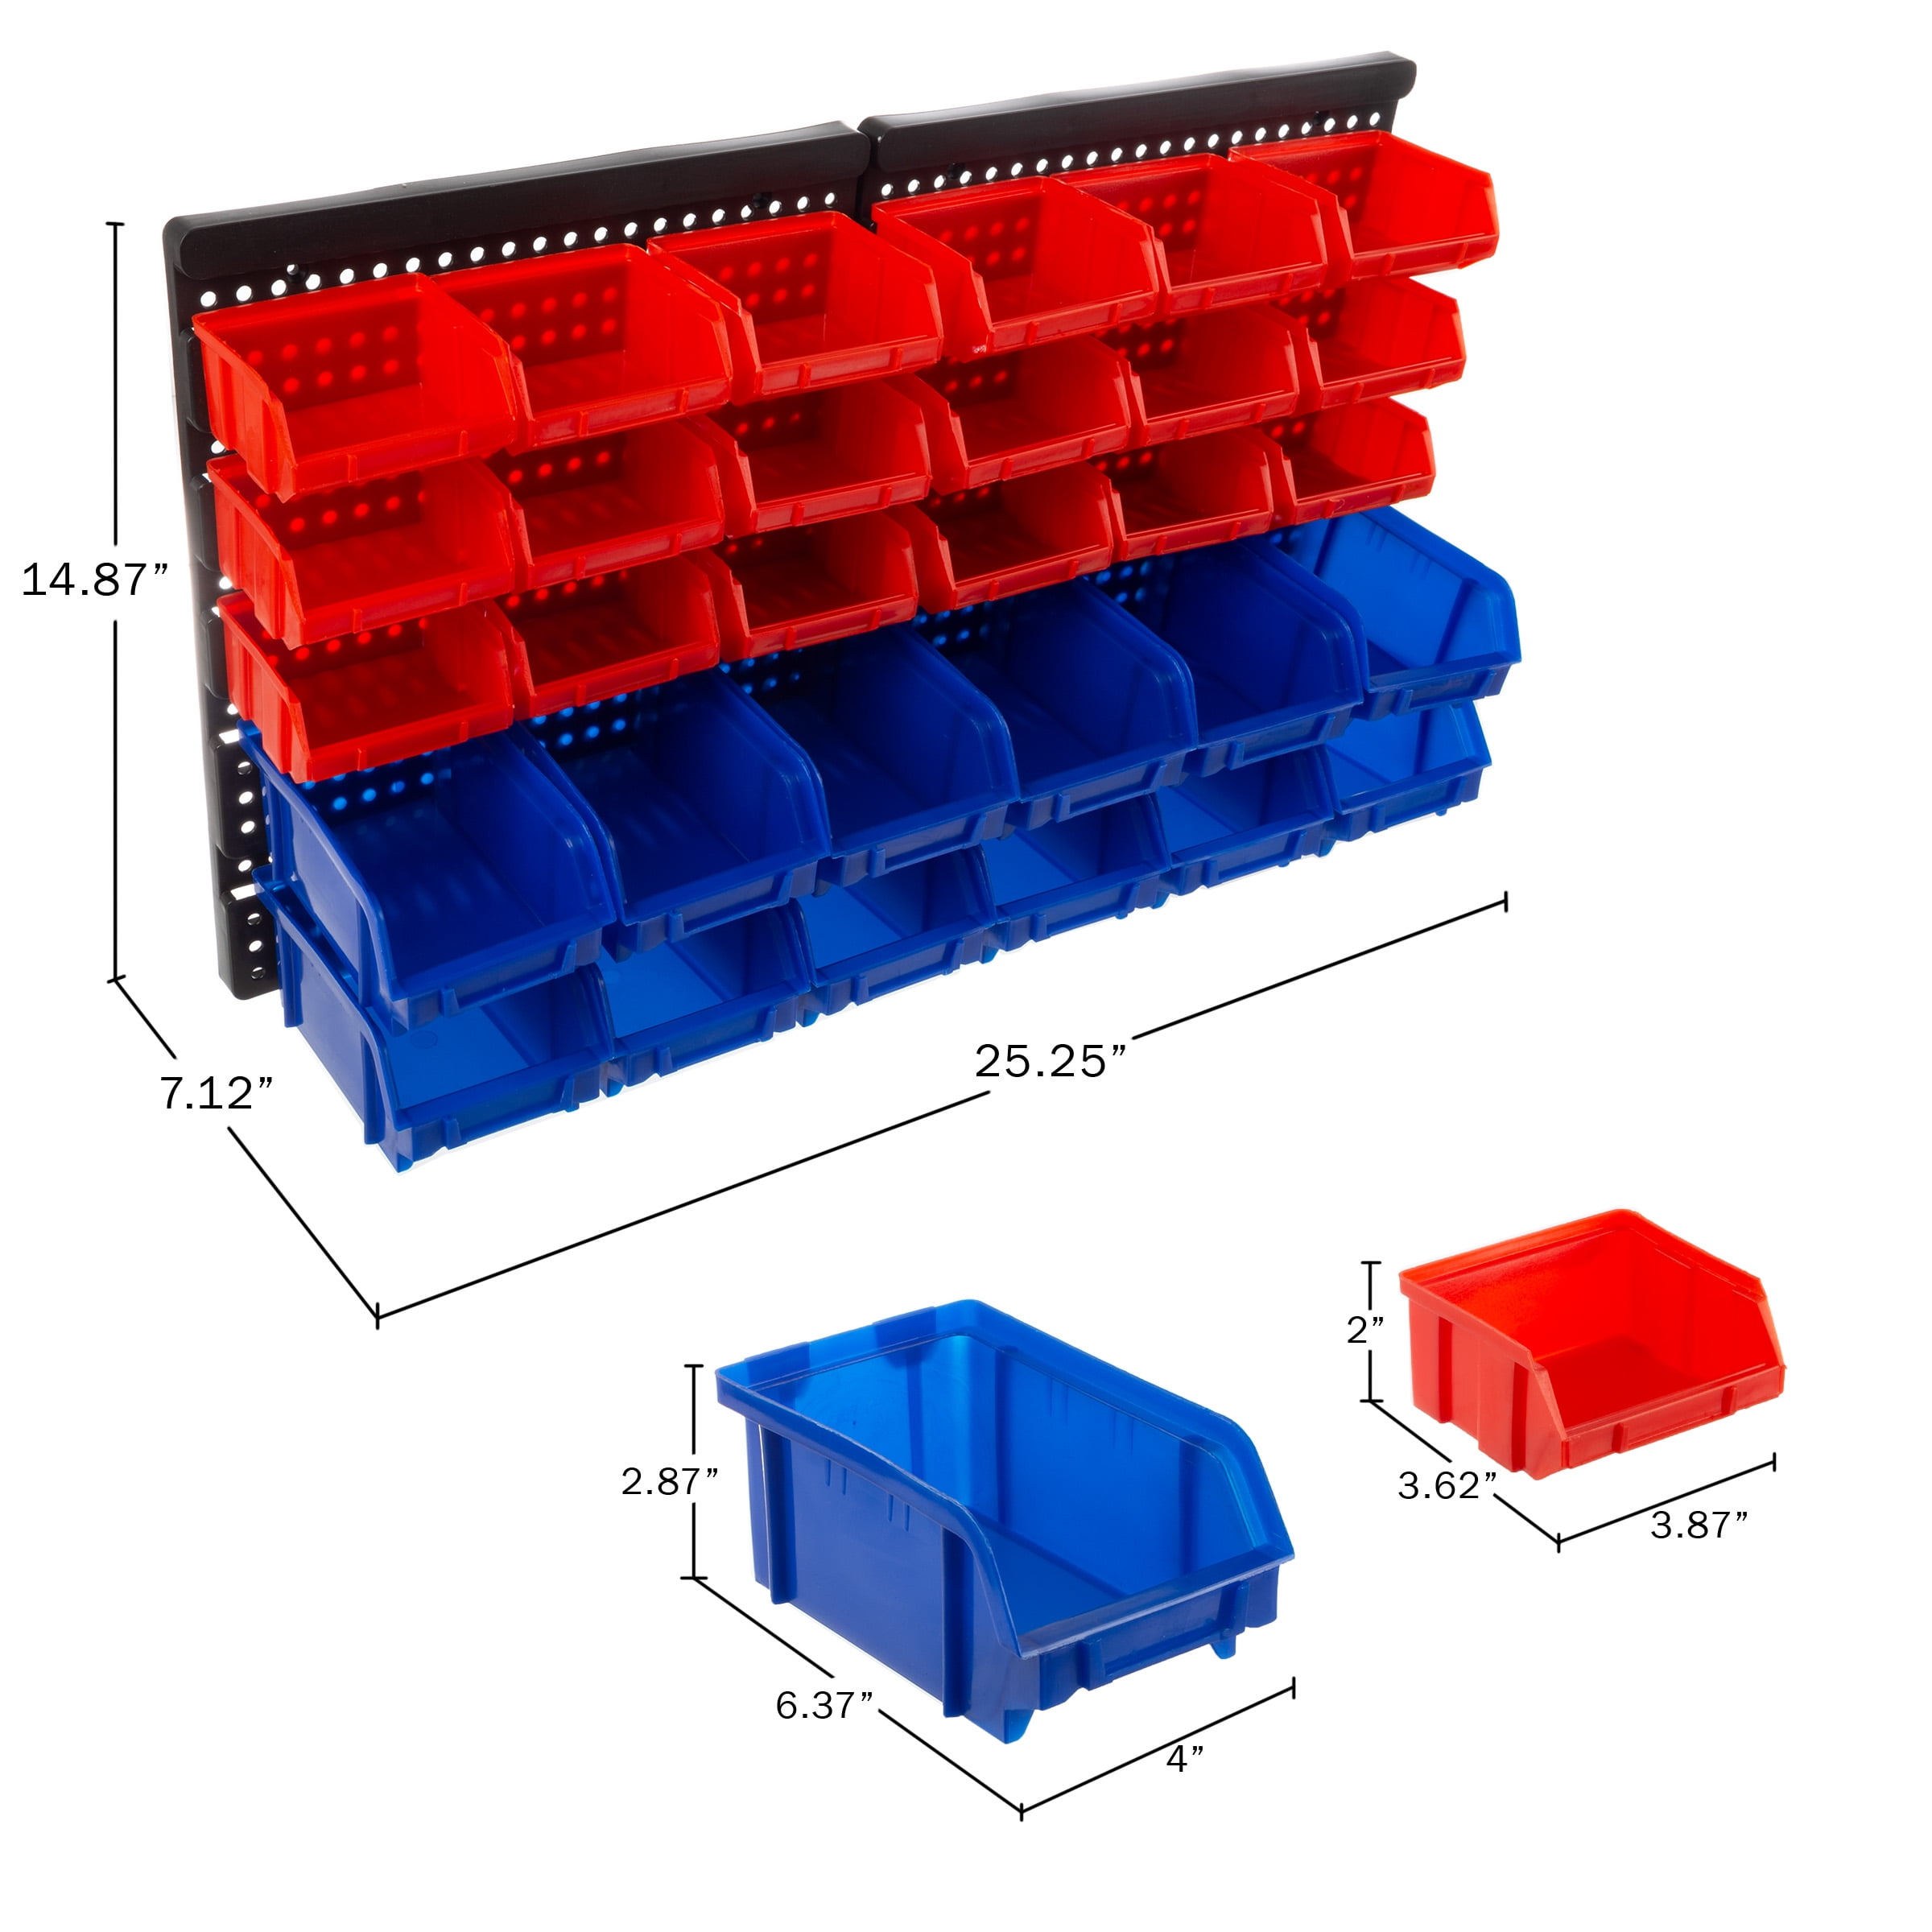 HORUSDY Wall Mounted Storage Bins Parts Rack 30PC Organizer Garage Plastic  Shop Tool for Men's Gift, Blue,Orange,Red